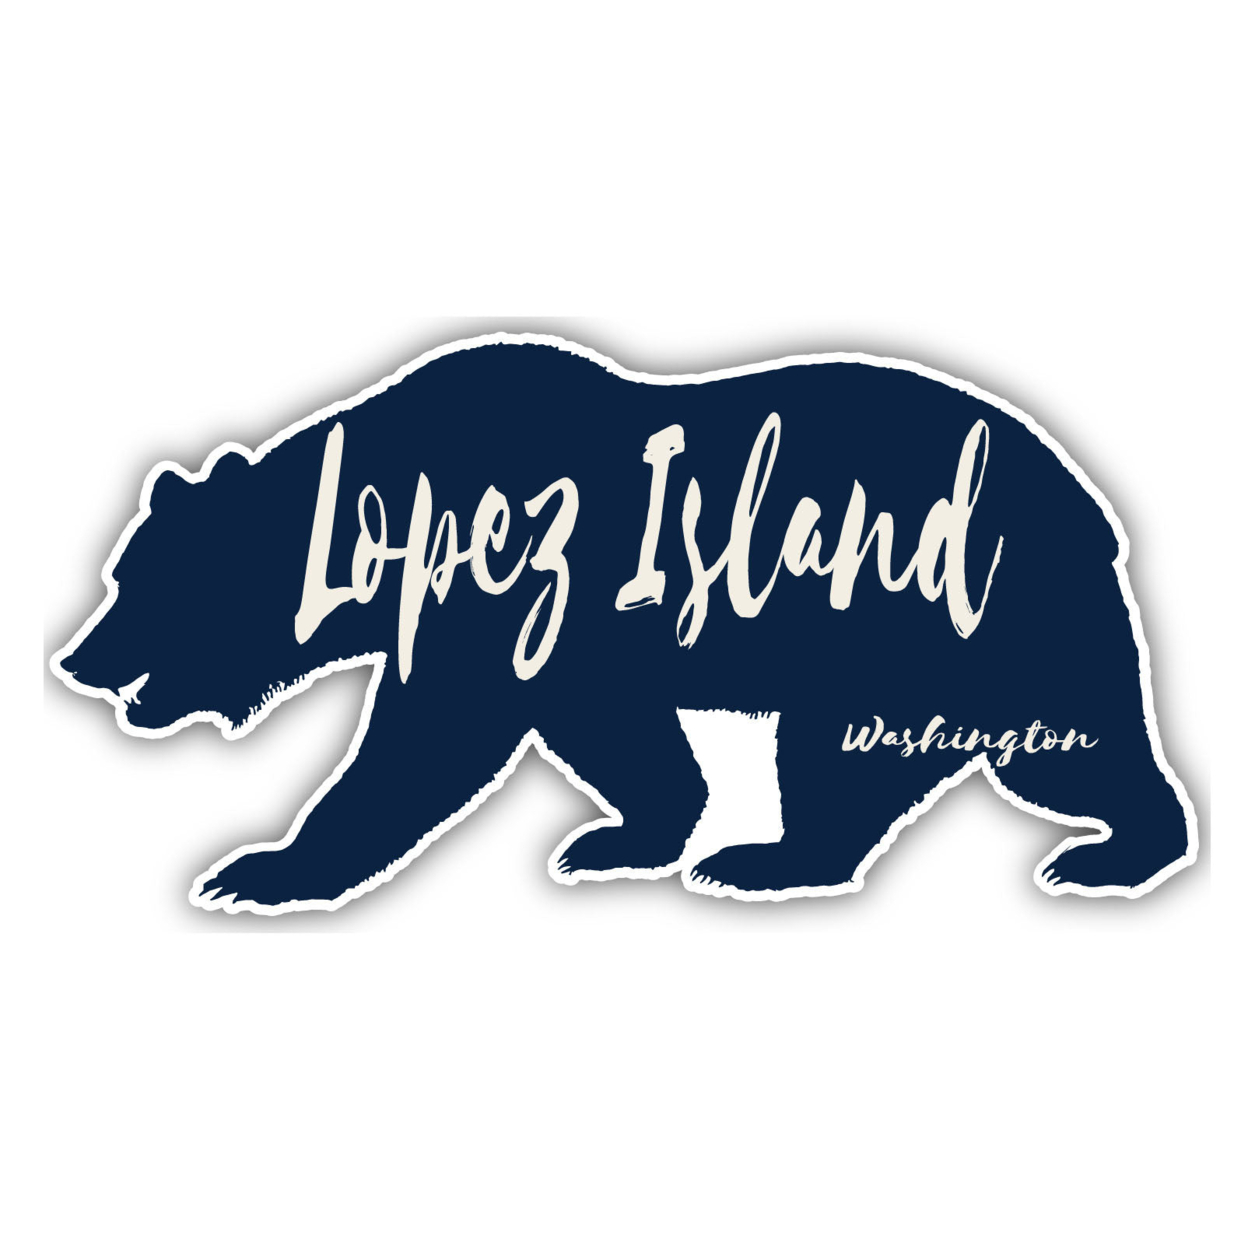 Lopez Island Washington Souvenir Decorative Stickers (Choose Theme And Size) - 4-Inch, Camp Life